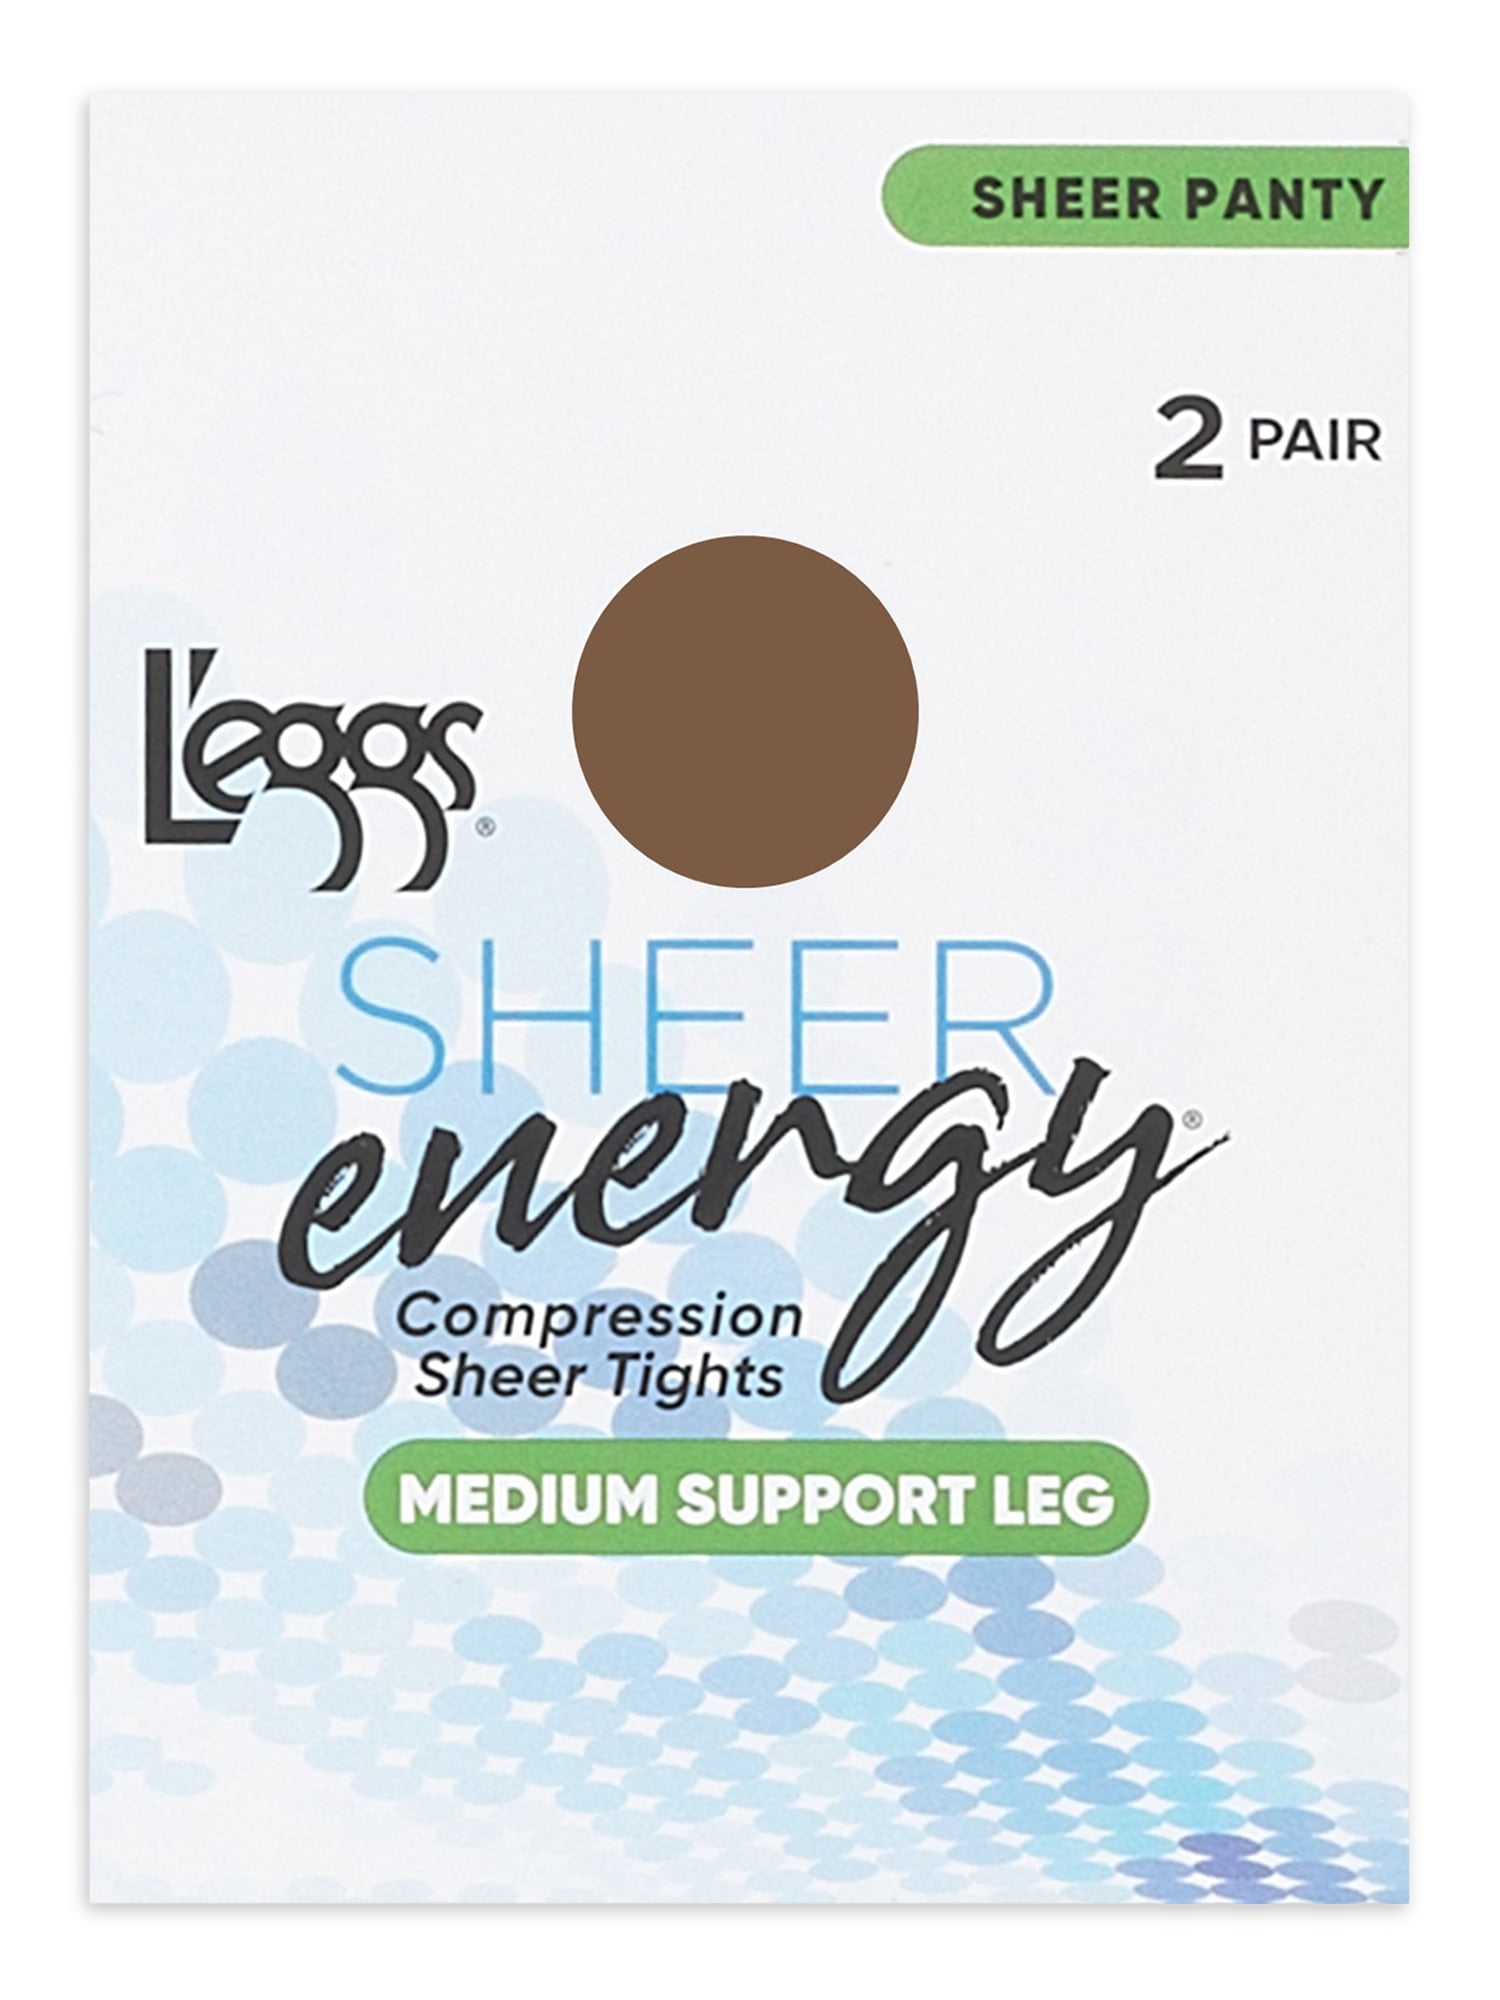 L'eggs Sheer Energy Medium Leg Support Sheer Panty Sheer Toe Tights, 2 Pair  